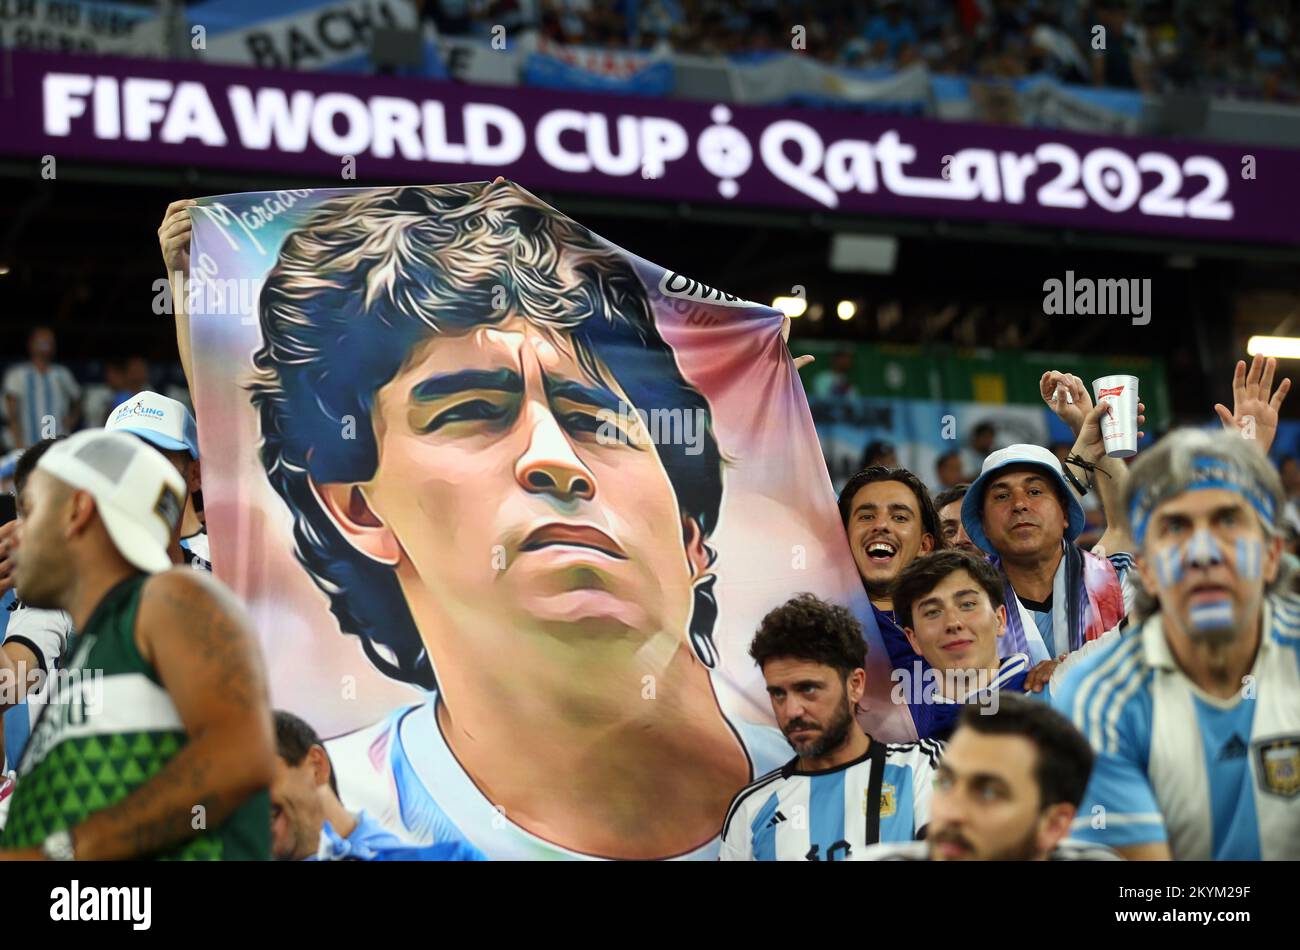 Maradona argentina world cup hi-res stock photography and images - Alamy